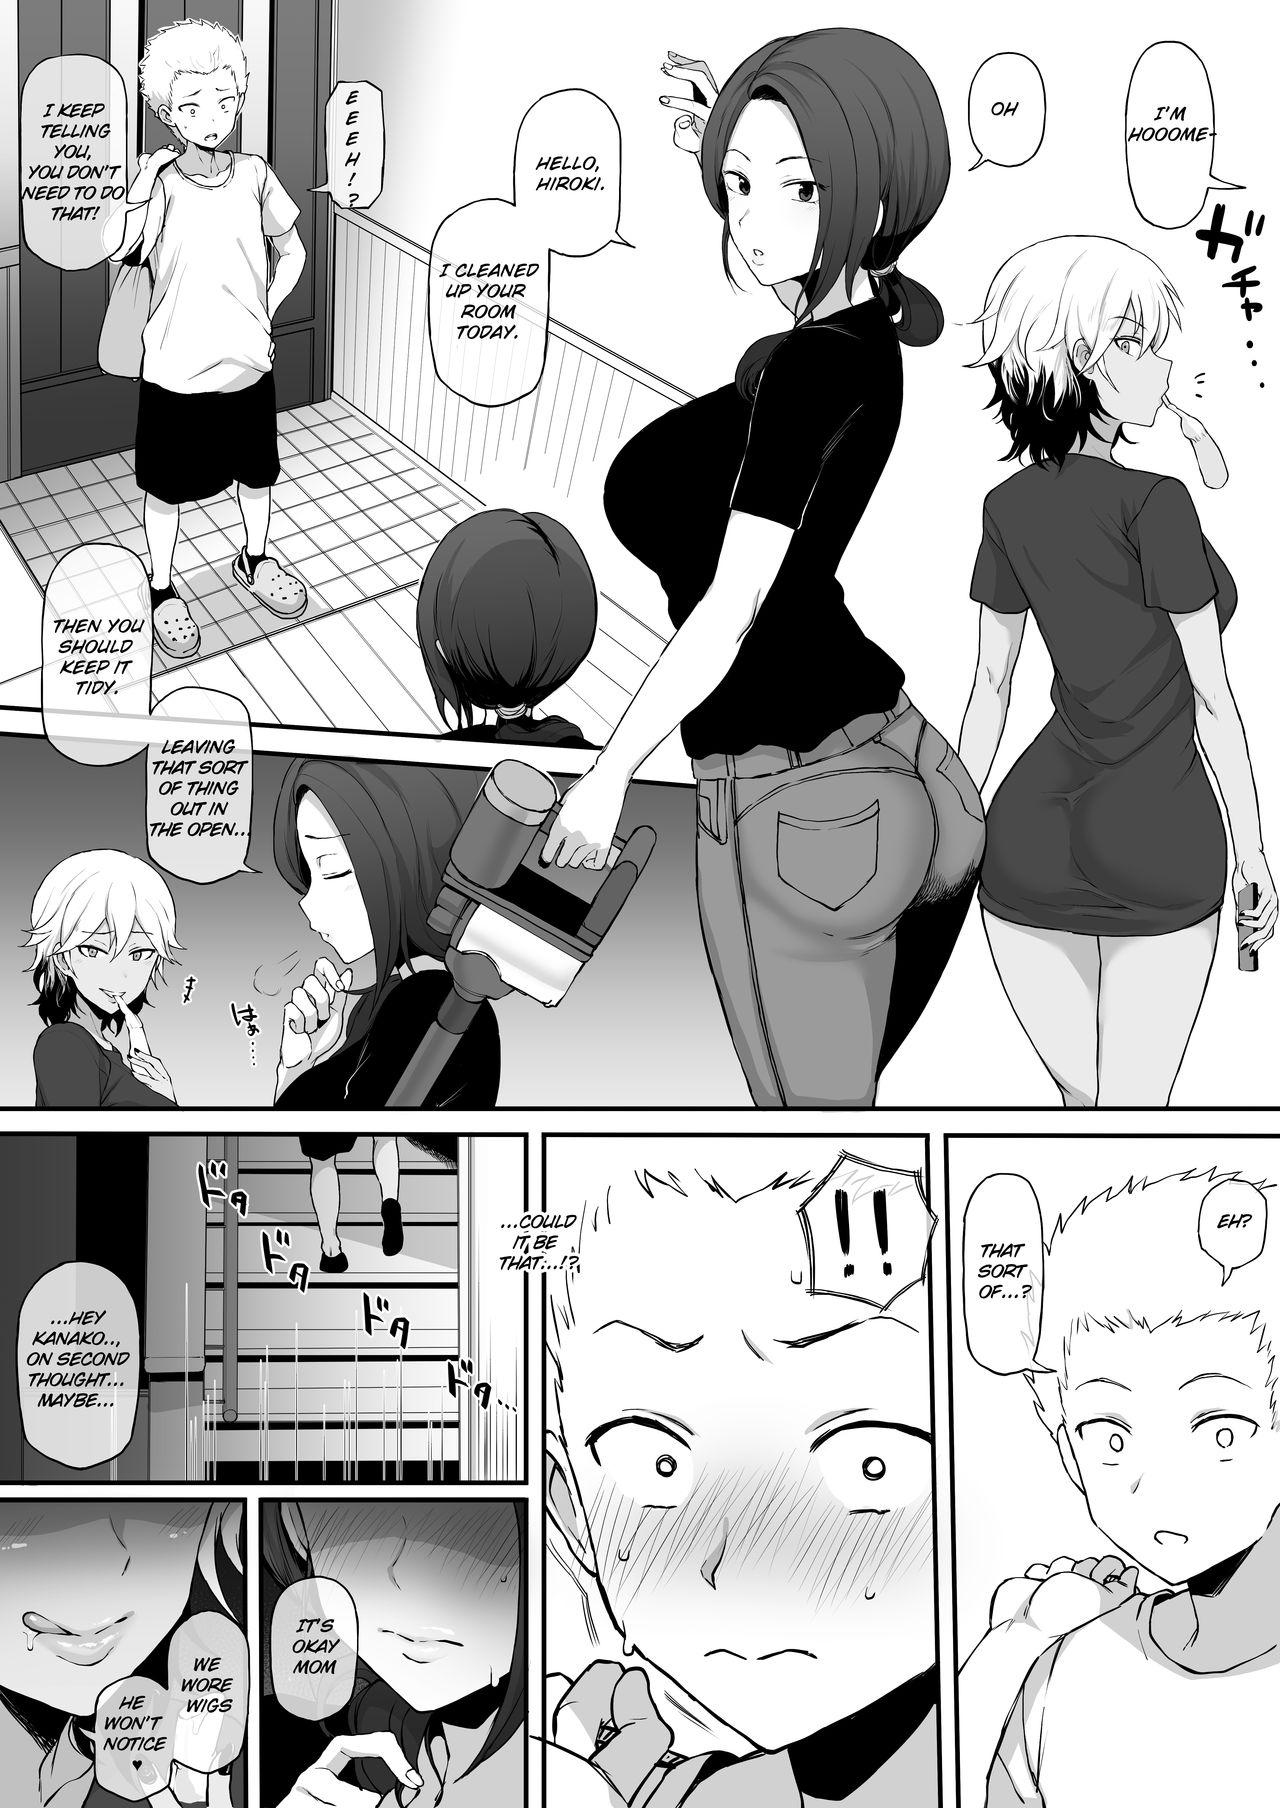 Kokujin no Tenkousei NTR ru Chapters 1-6 part 1 Plus Bonus chapter: Stolen Mother’s Breasts 23